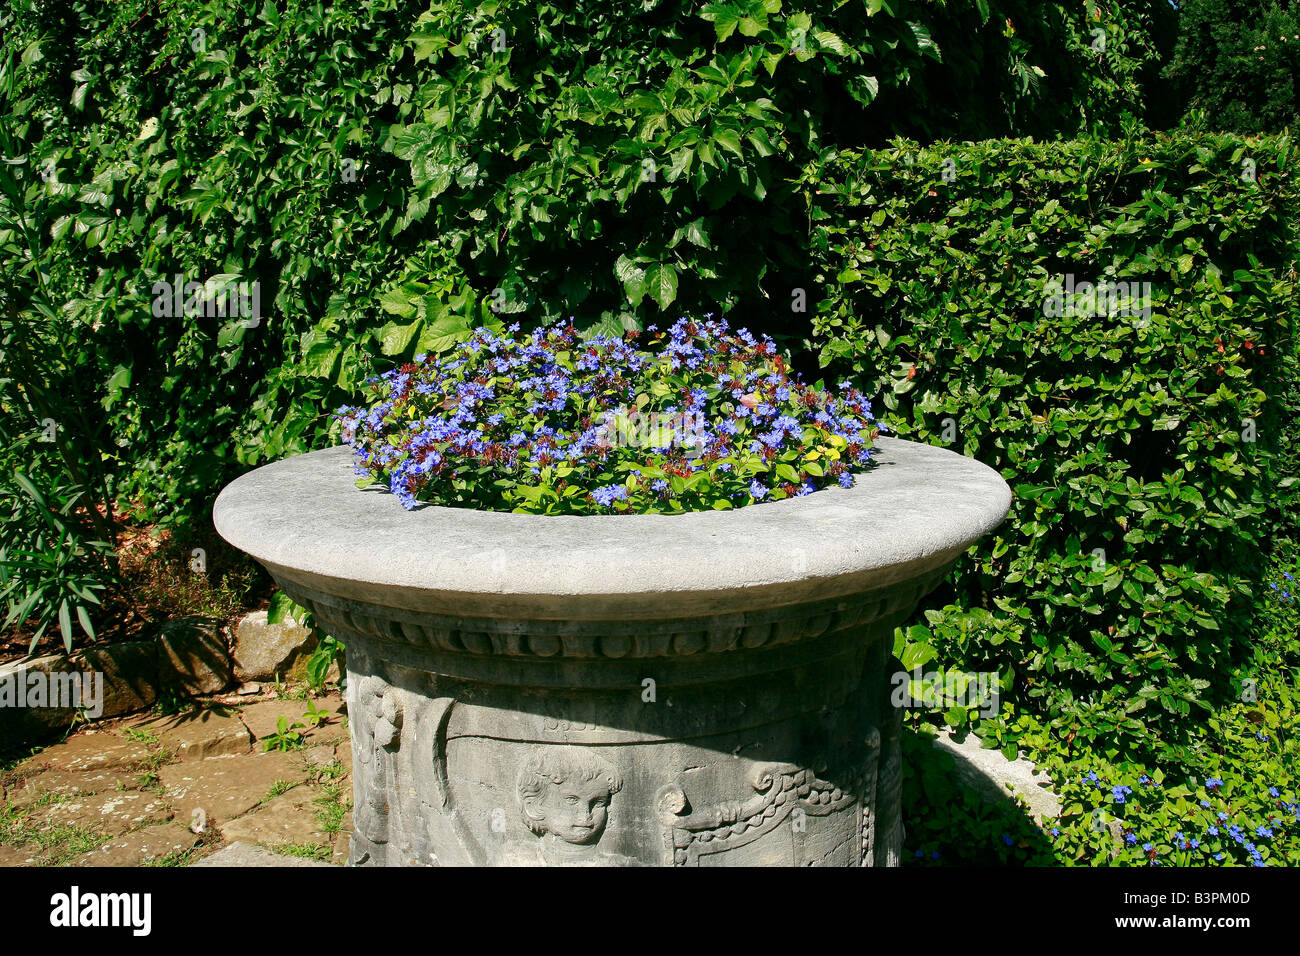 Flower pot with Ceratostigma plumbaginoides, Duino castle, Duino-Aurisina, Friuli Venezia Giulia, Italy Stock Photo